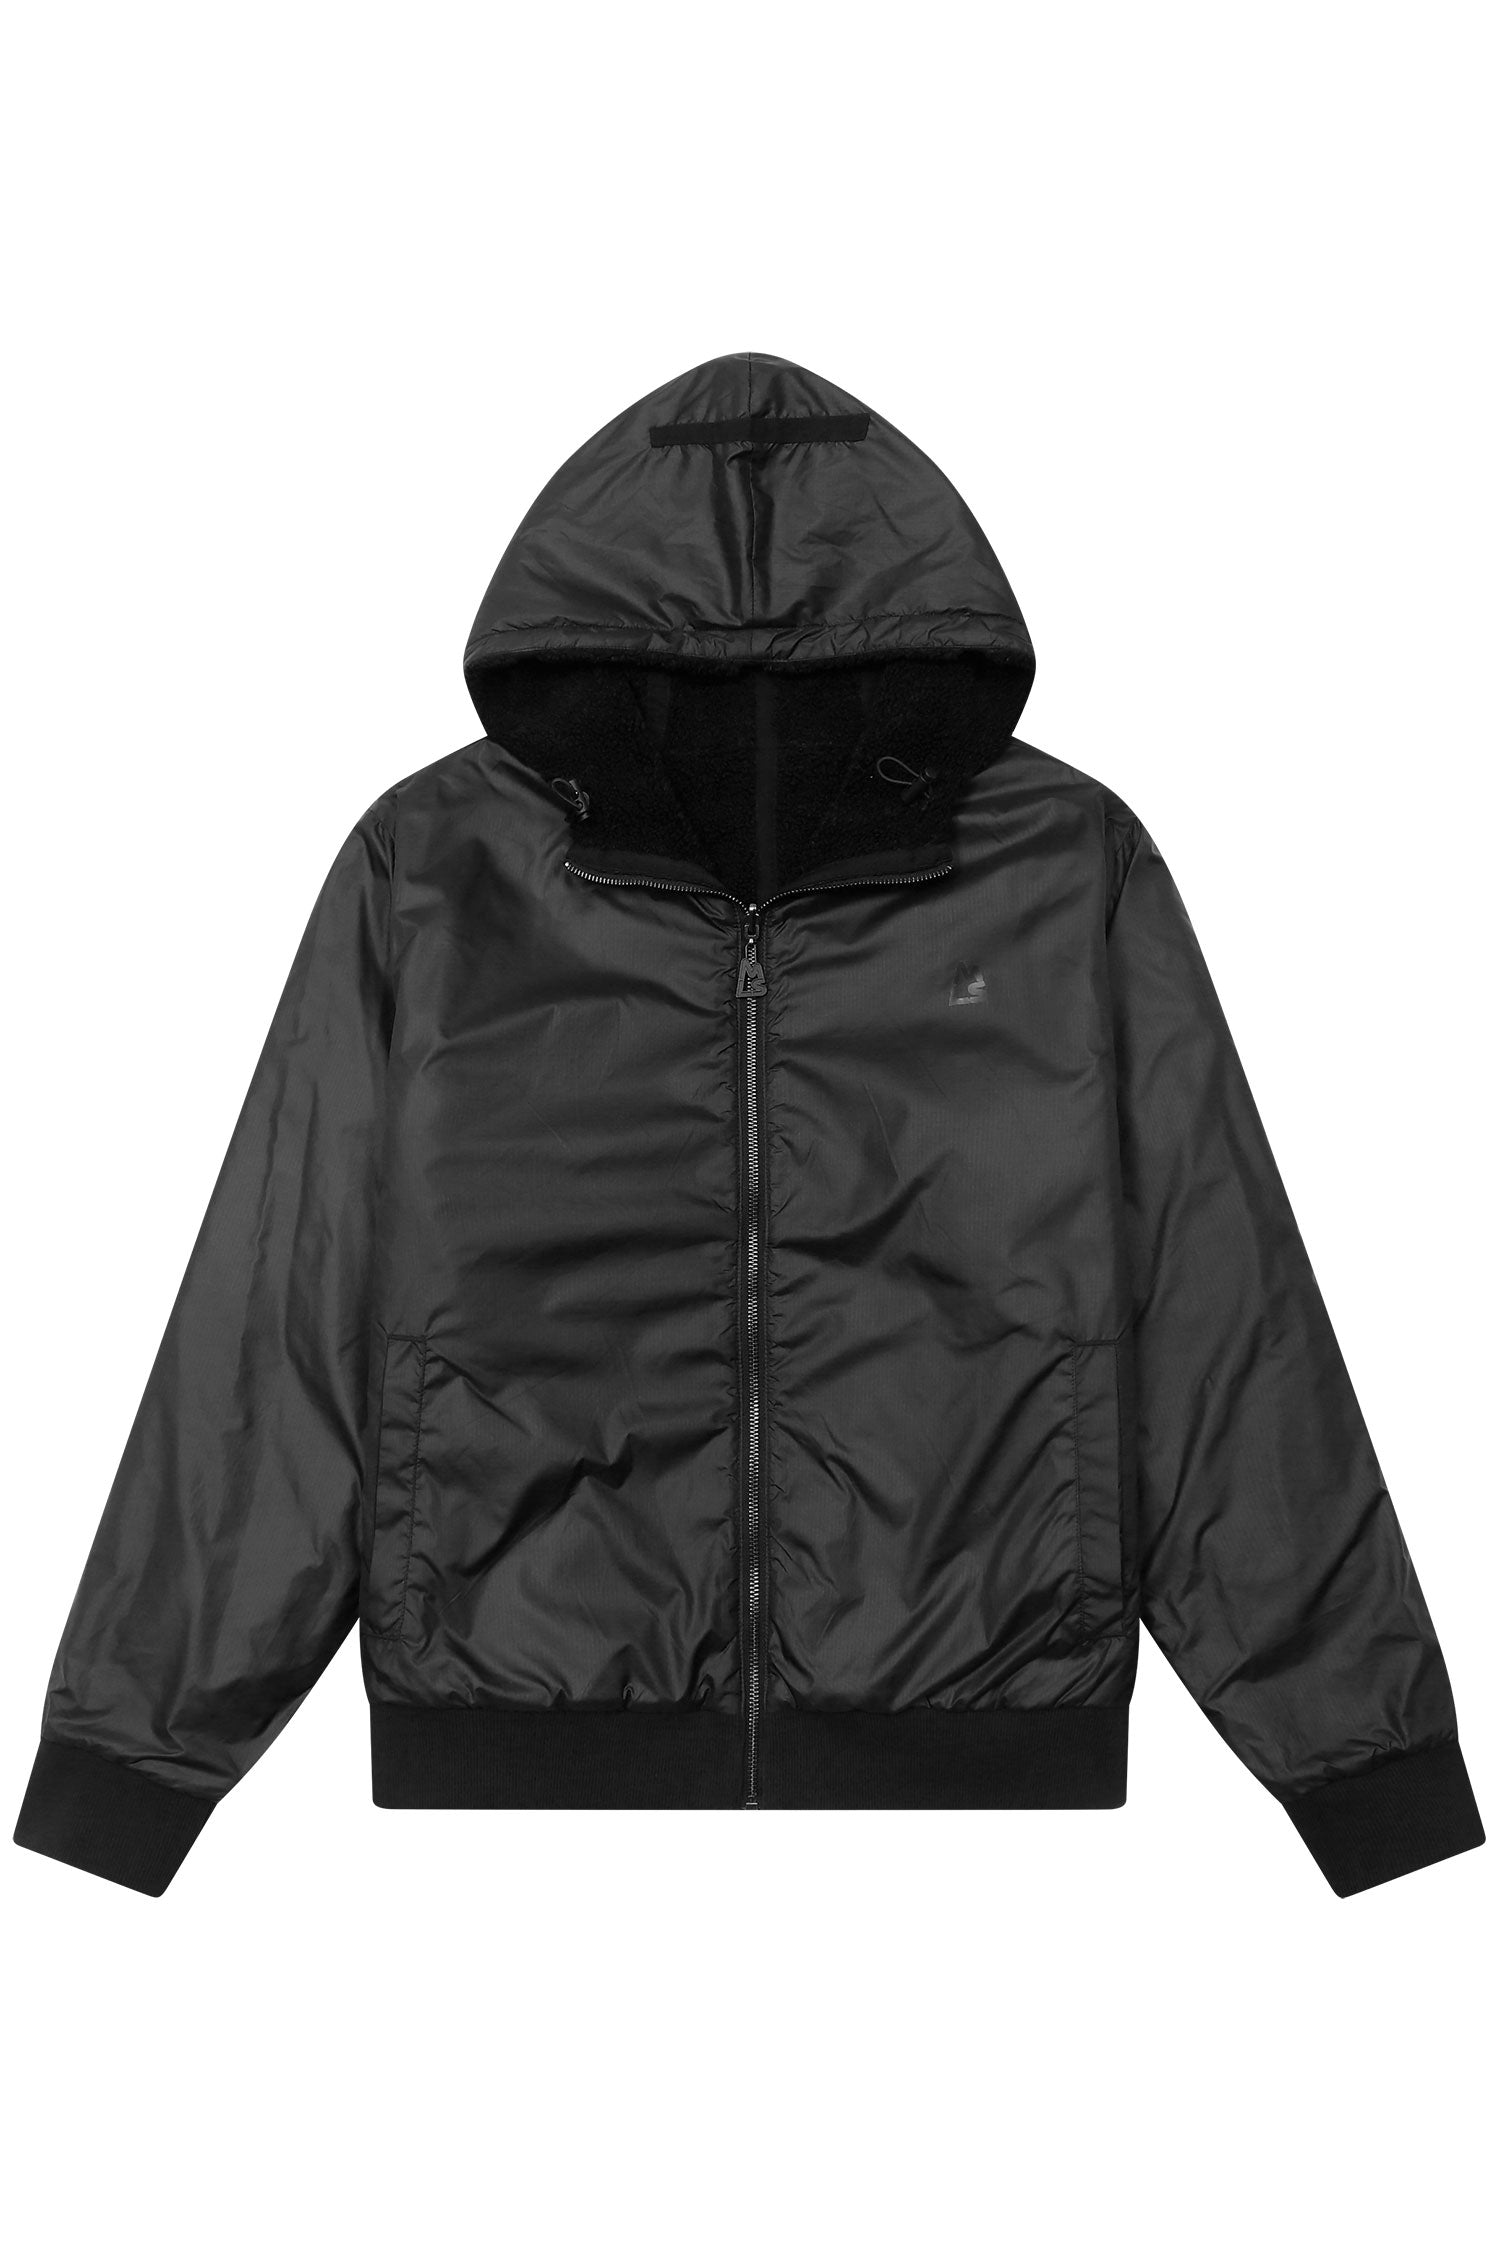 Atmos Zip-Up Reversible Jacket